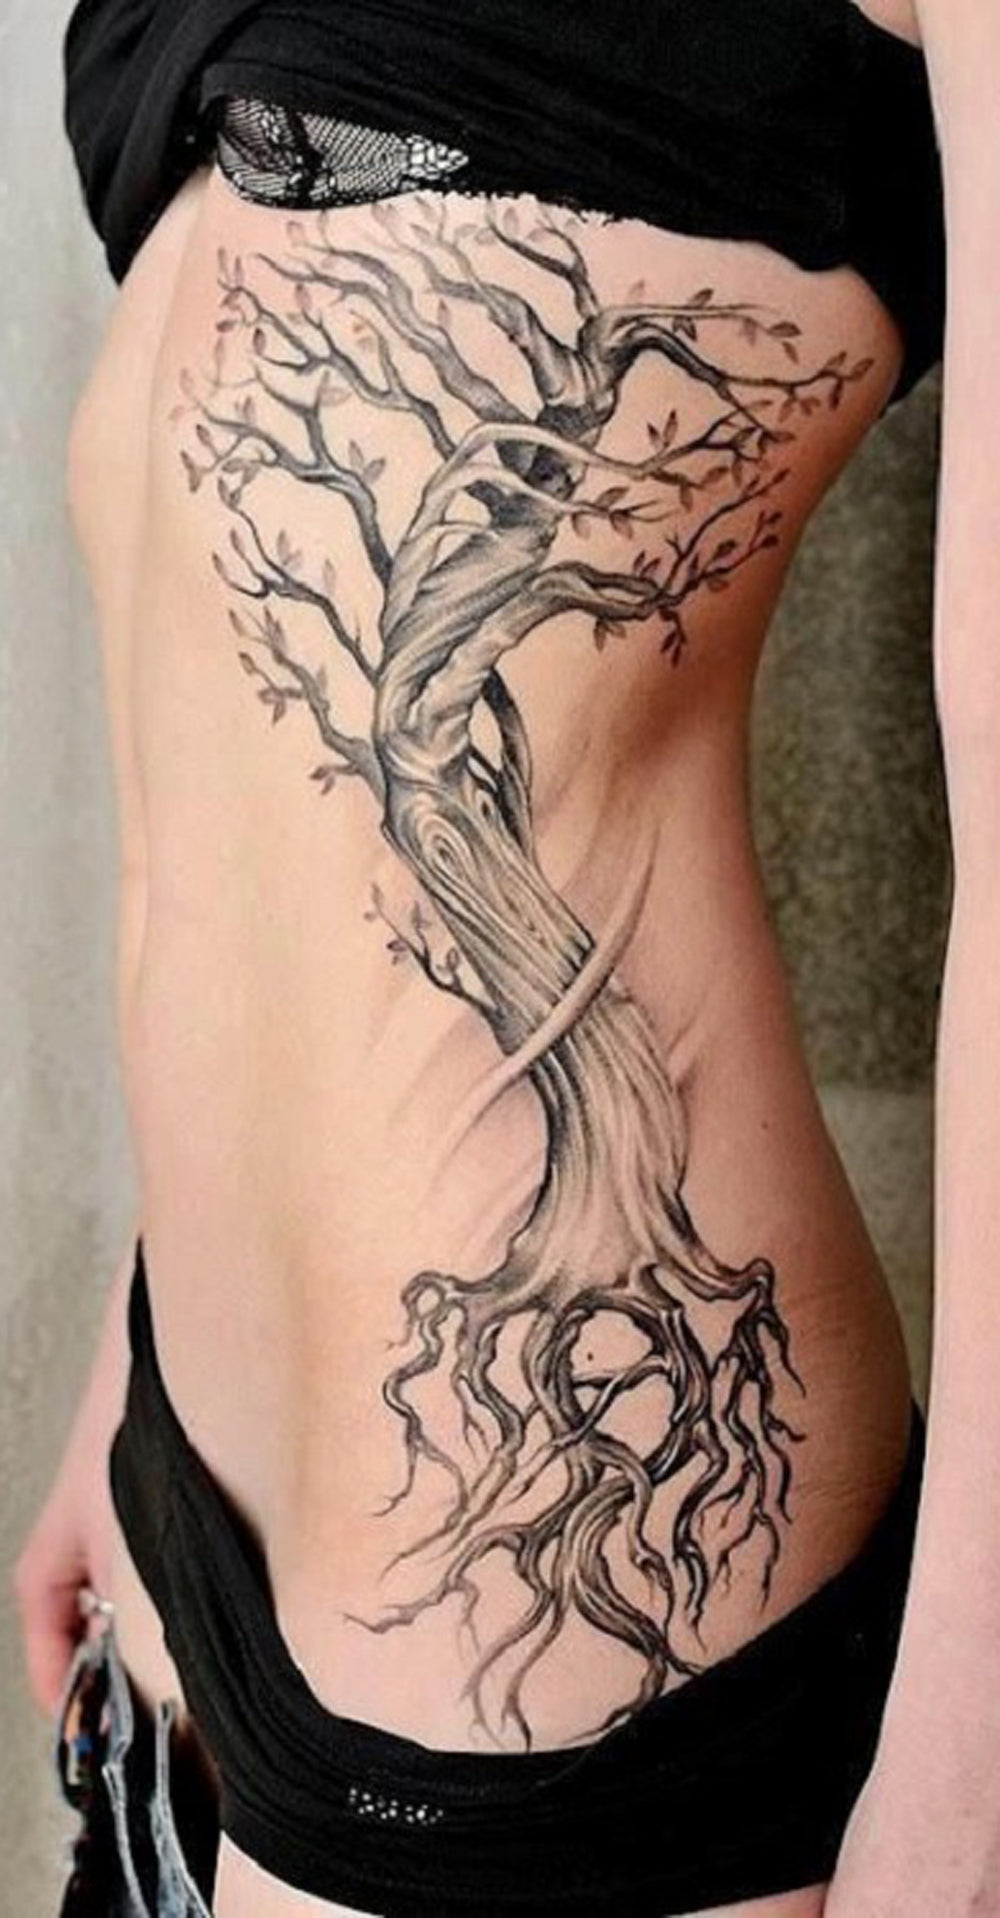 Full Large Tree Side Rib Tattoo Ideas Nature Body Tatt -  Ideas de tatuaje de la costilla de lado de árbol grande completo - www.MyBodiArt.com